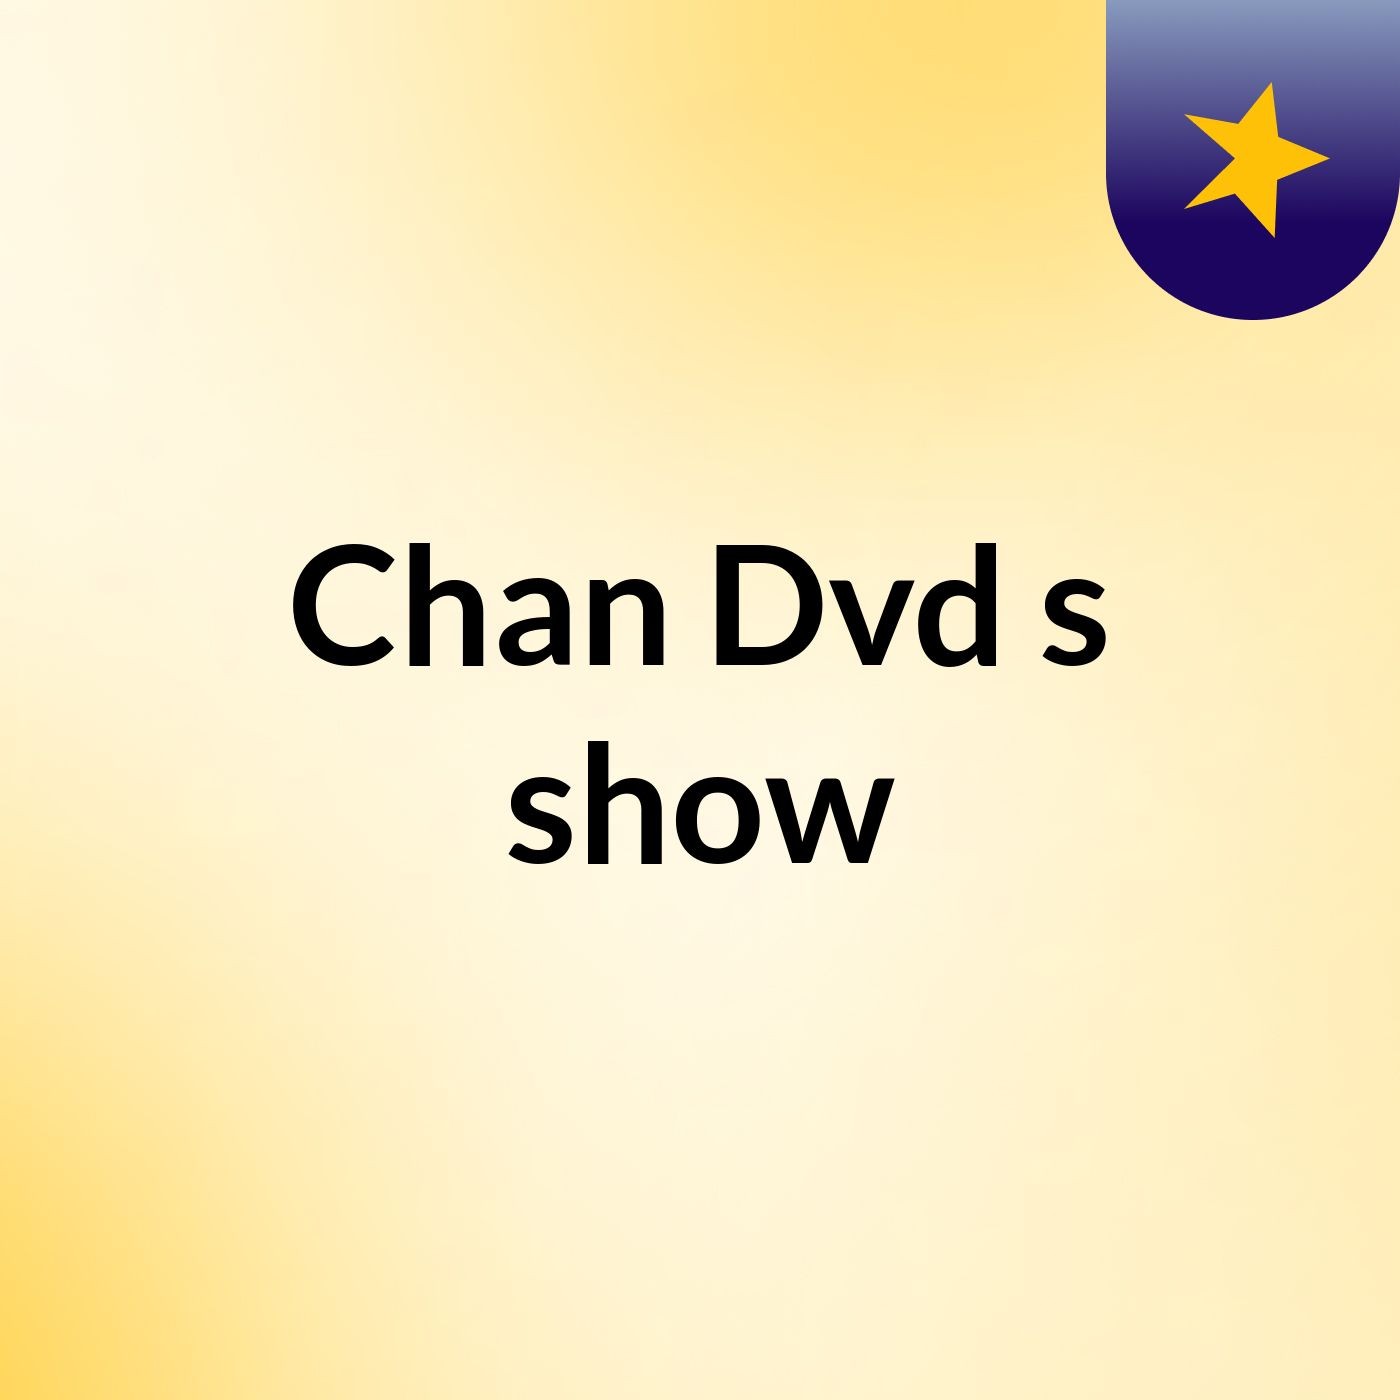 Chan Dvd's show